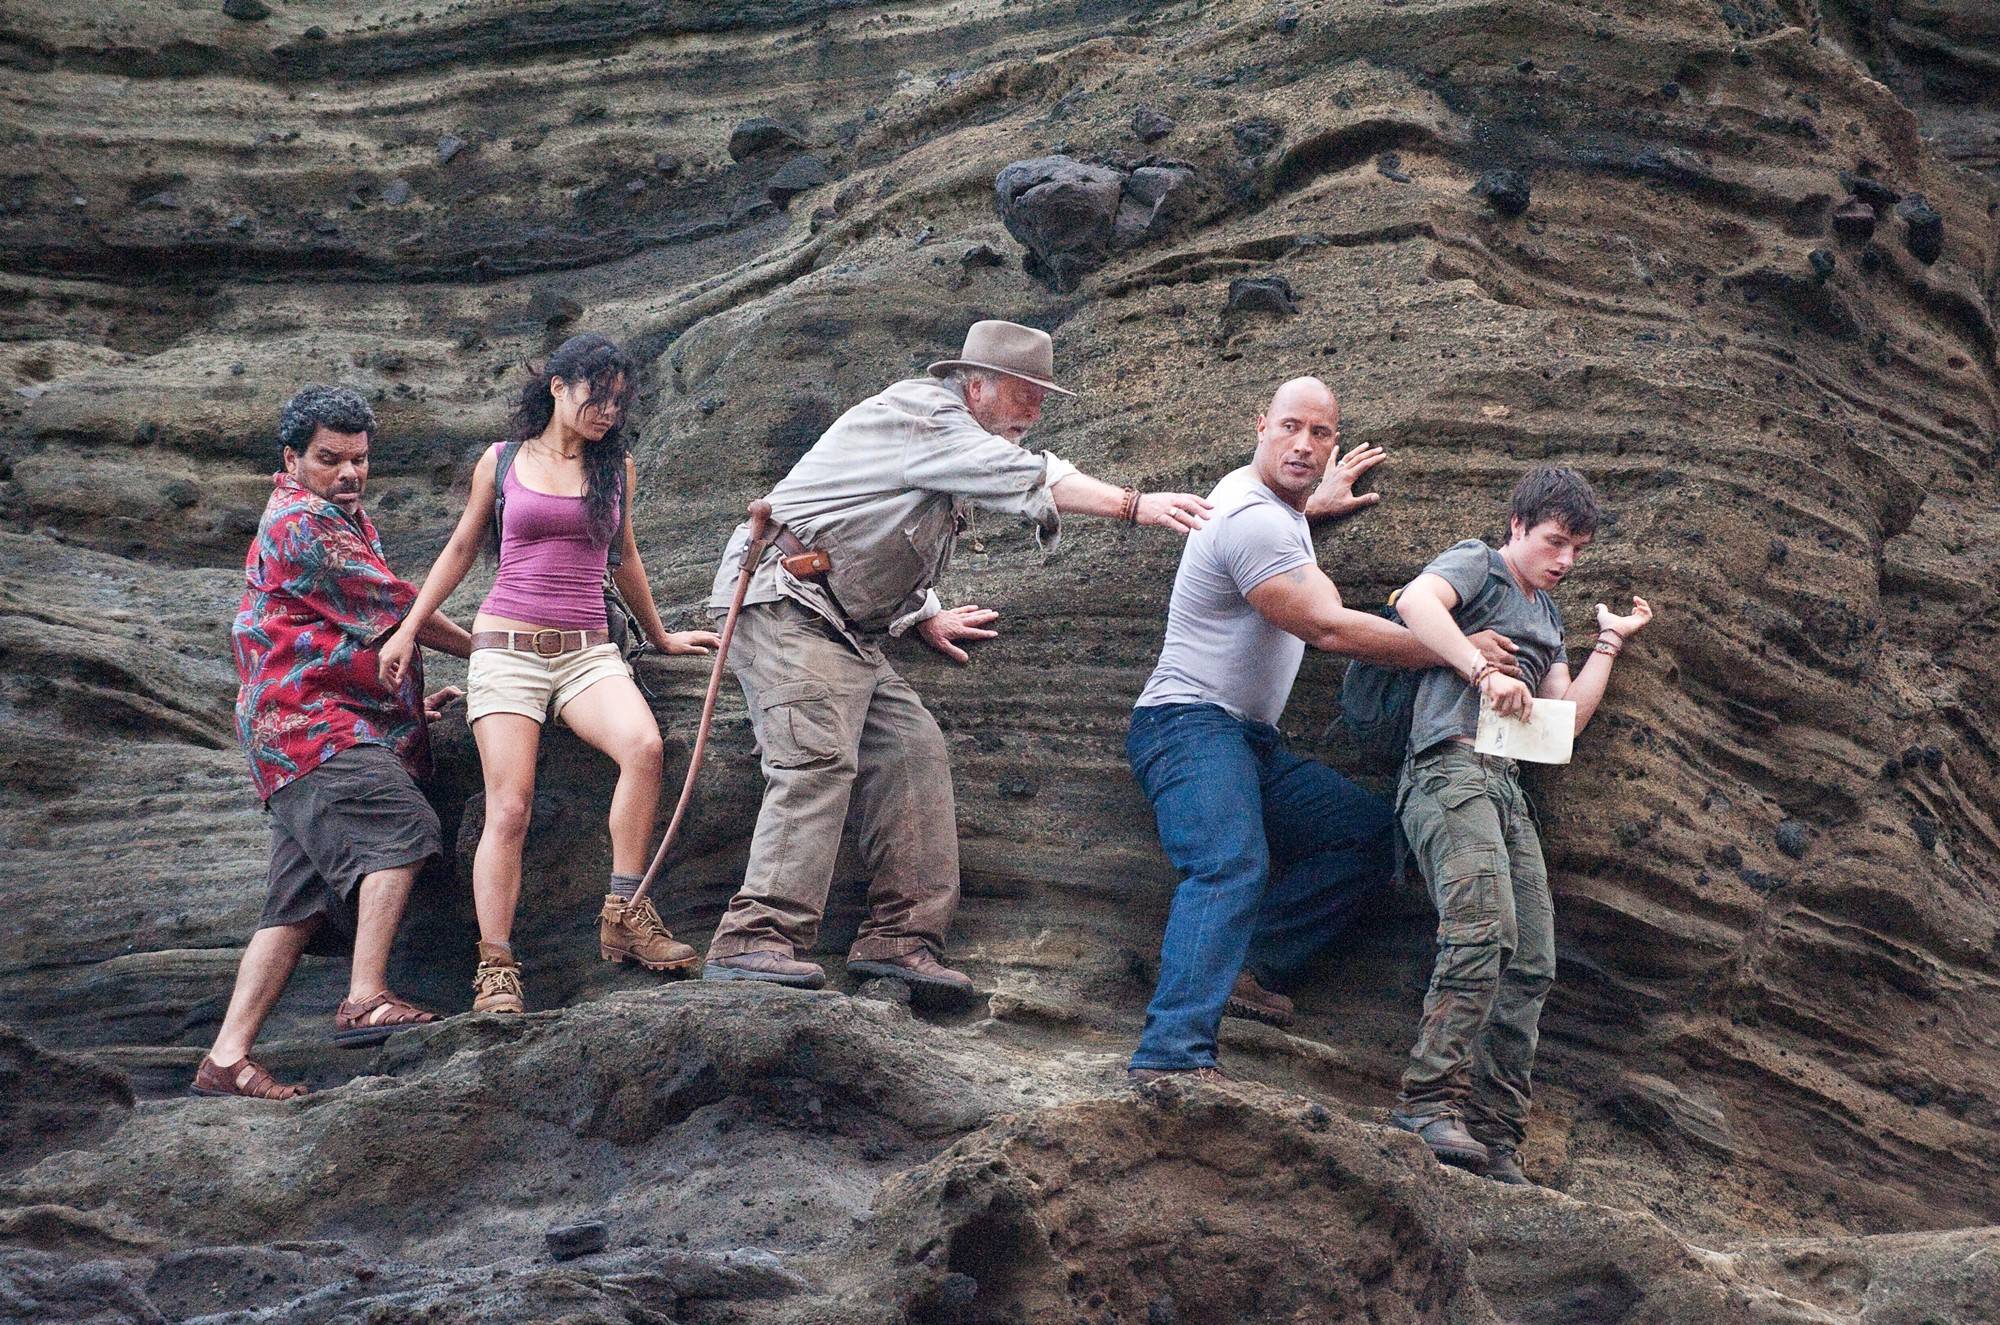 Luis Guzman, Vanessa Hudgens, Michael Caine, The Rock and Josh Hutcherson in Warner Bros. Pictures' Journey 2: The Mysterious Island (2012)